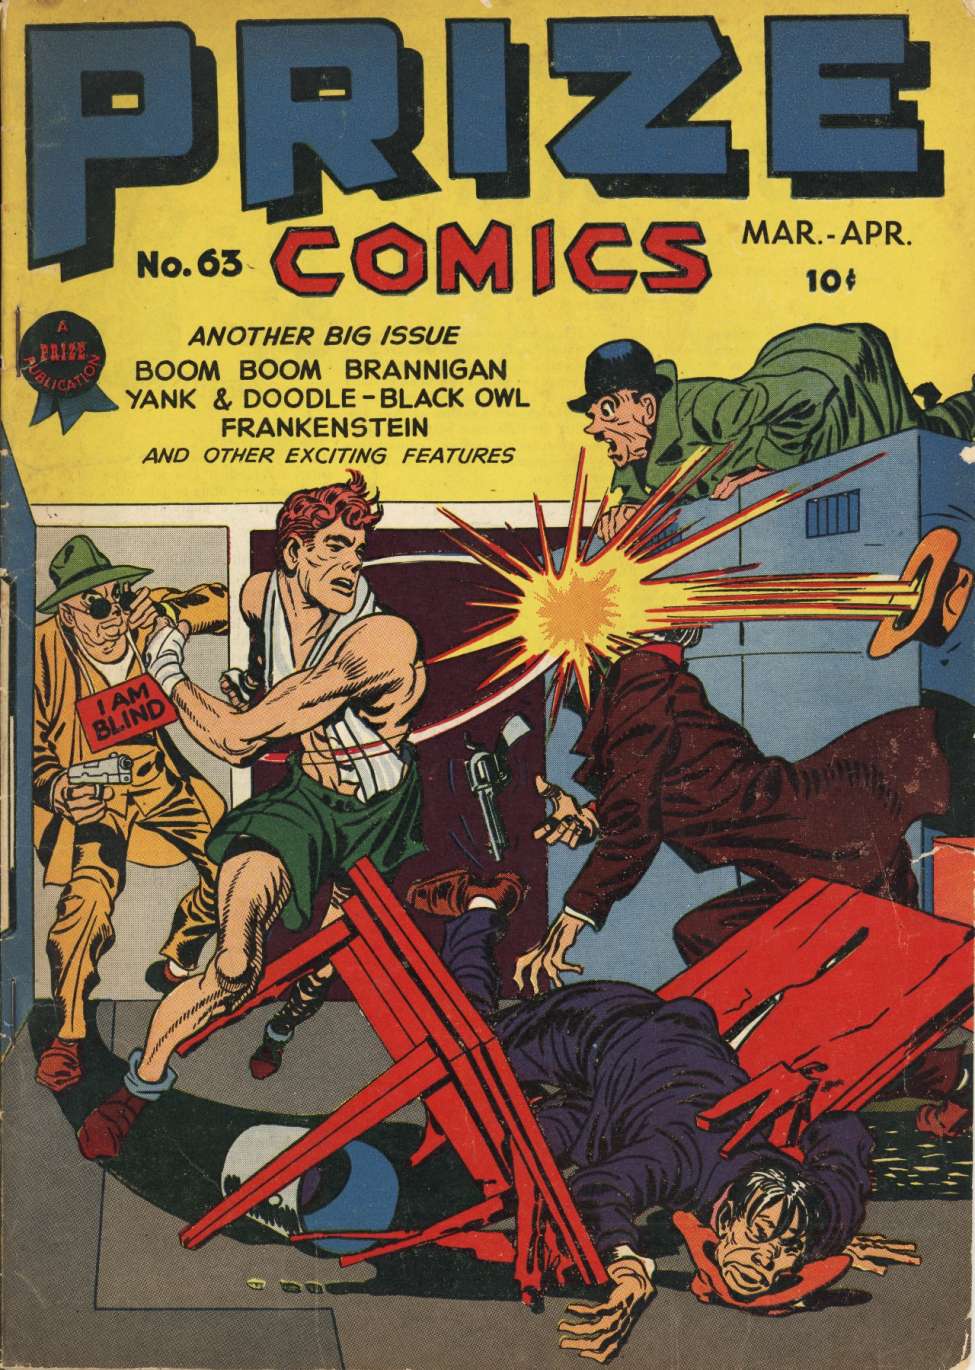 Book Cover For Prize Comics 63 - Version 2